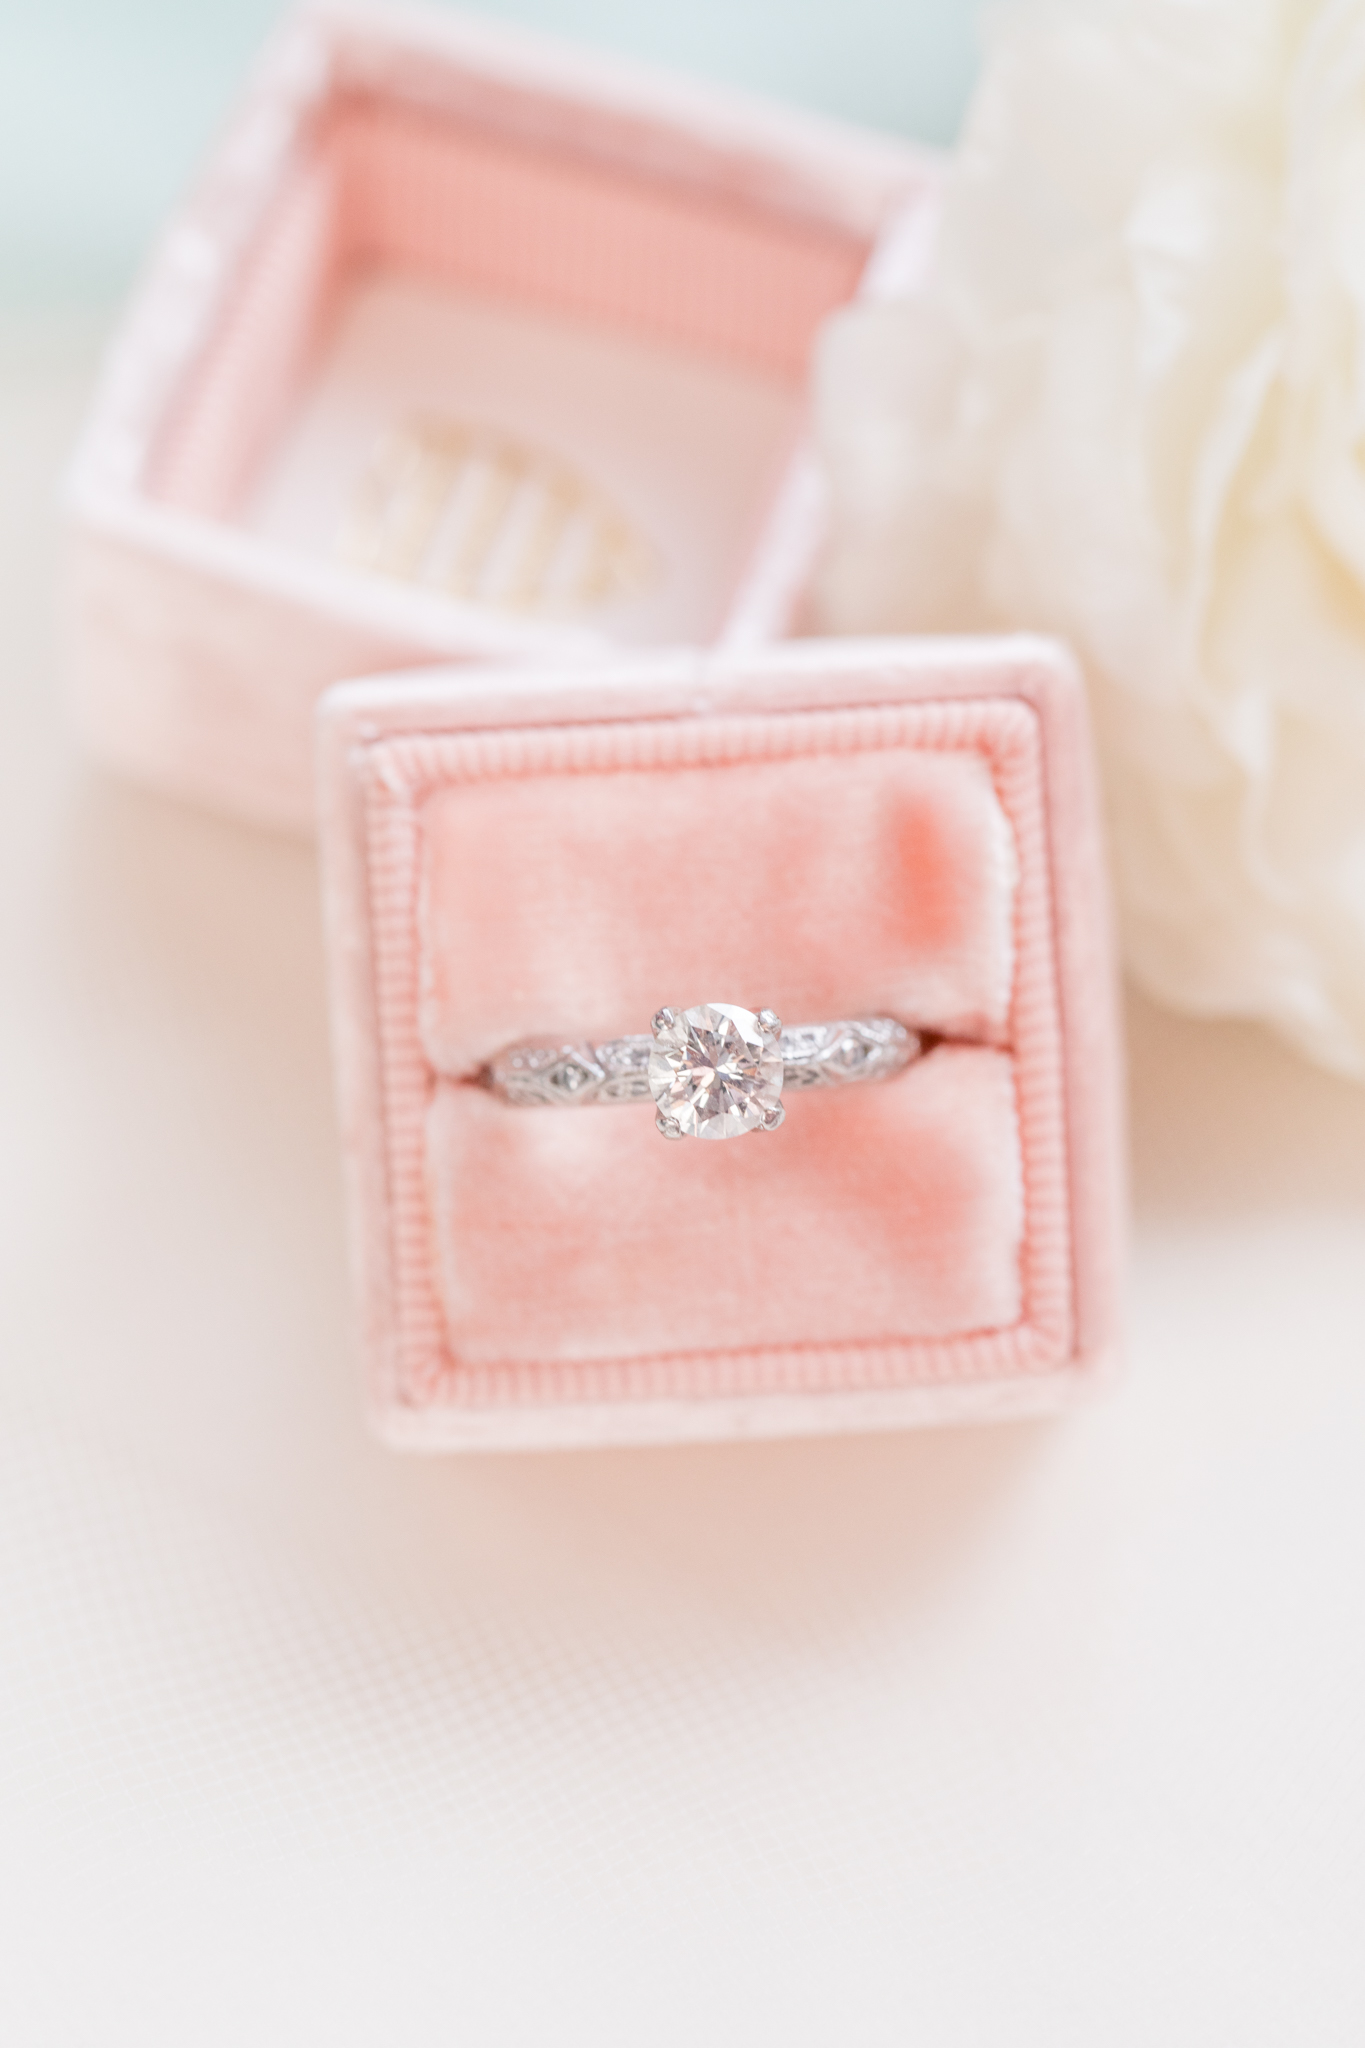 St. Petersburg bride's engagement ring.